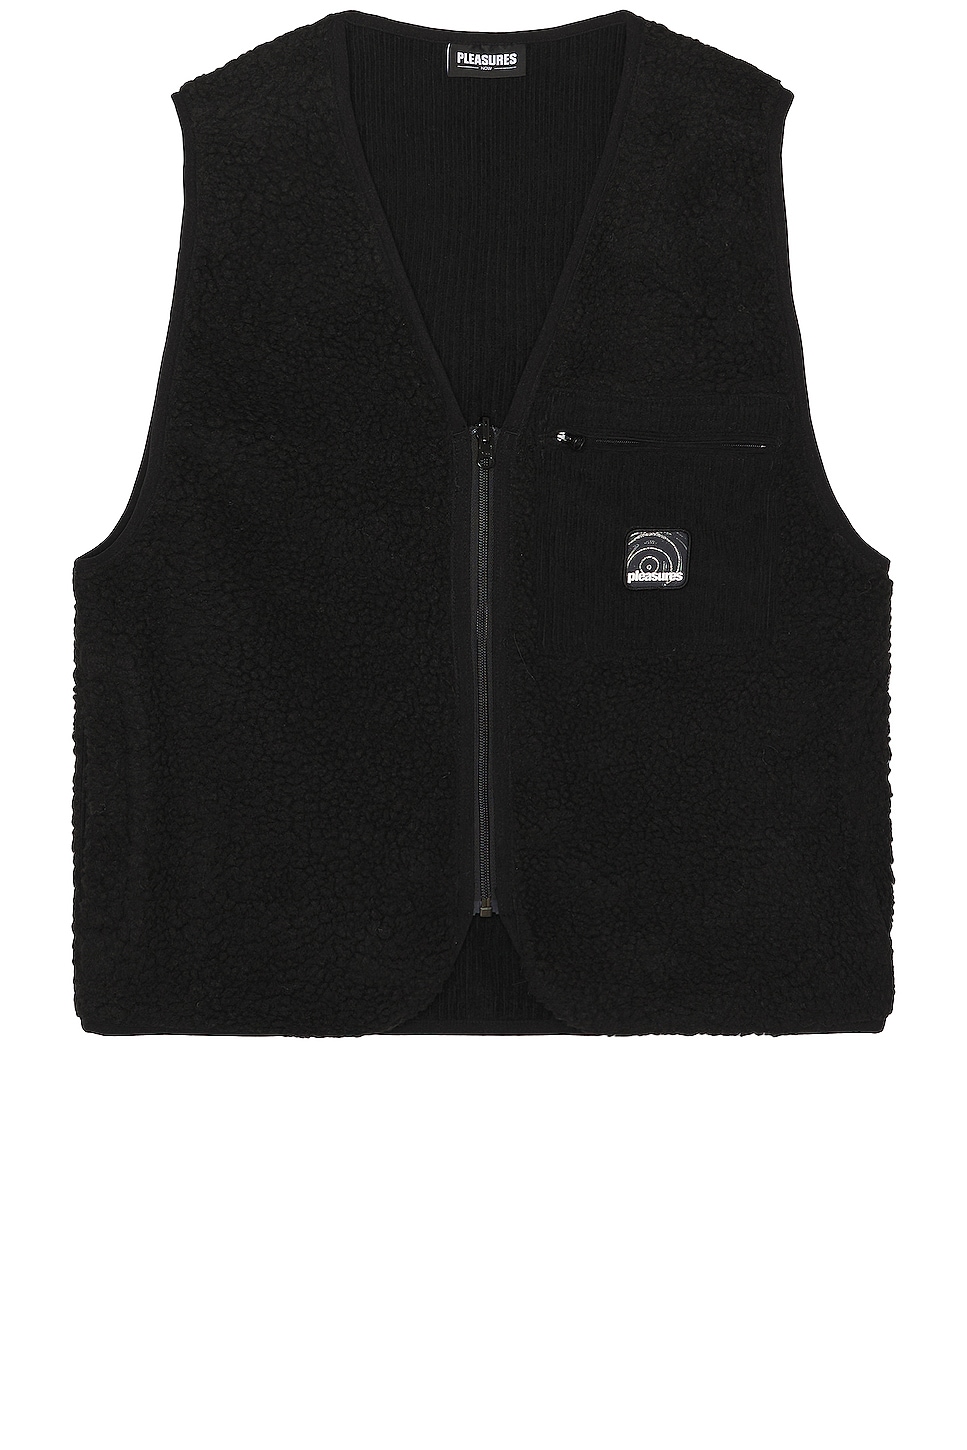 Pleasures Infinite Sherpa Fleece Reversible Vest in Black | FWRD